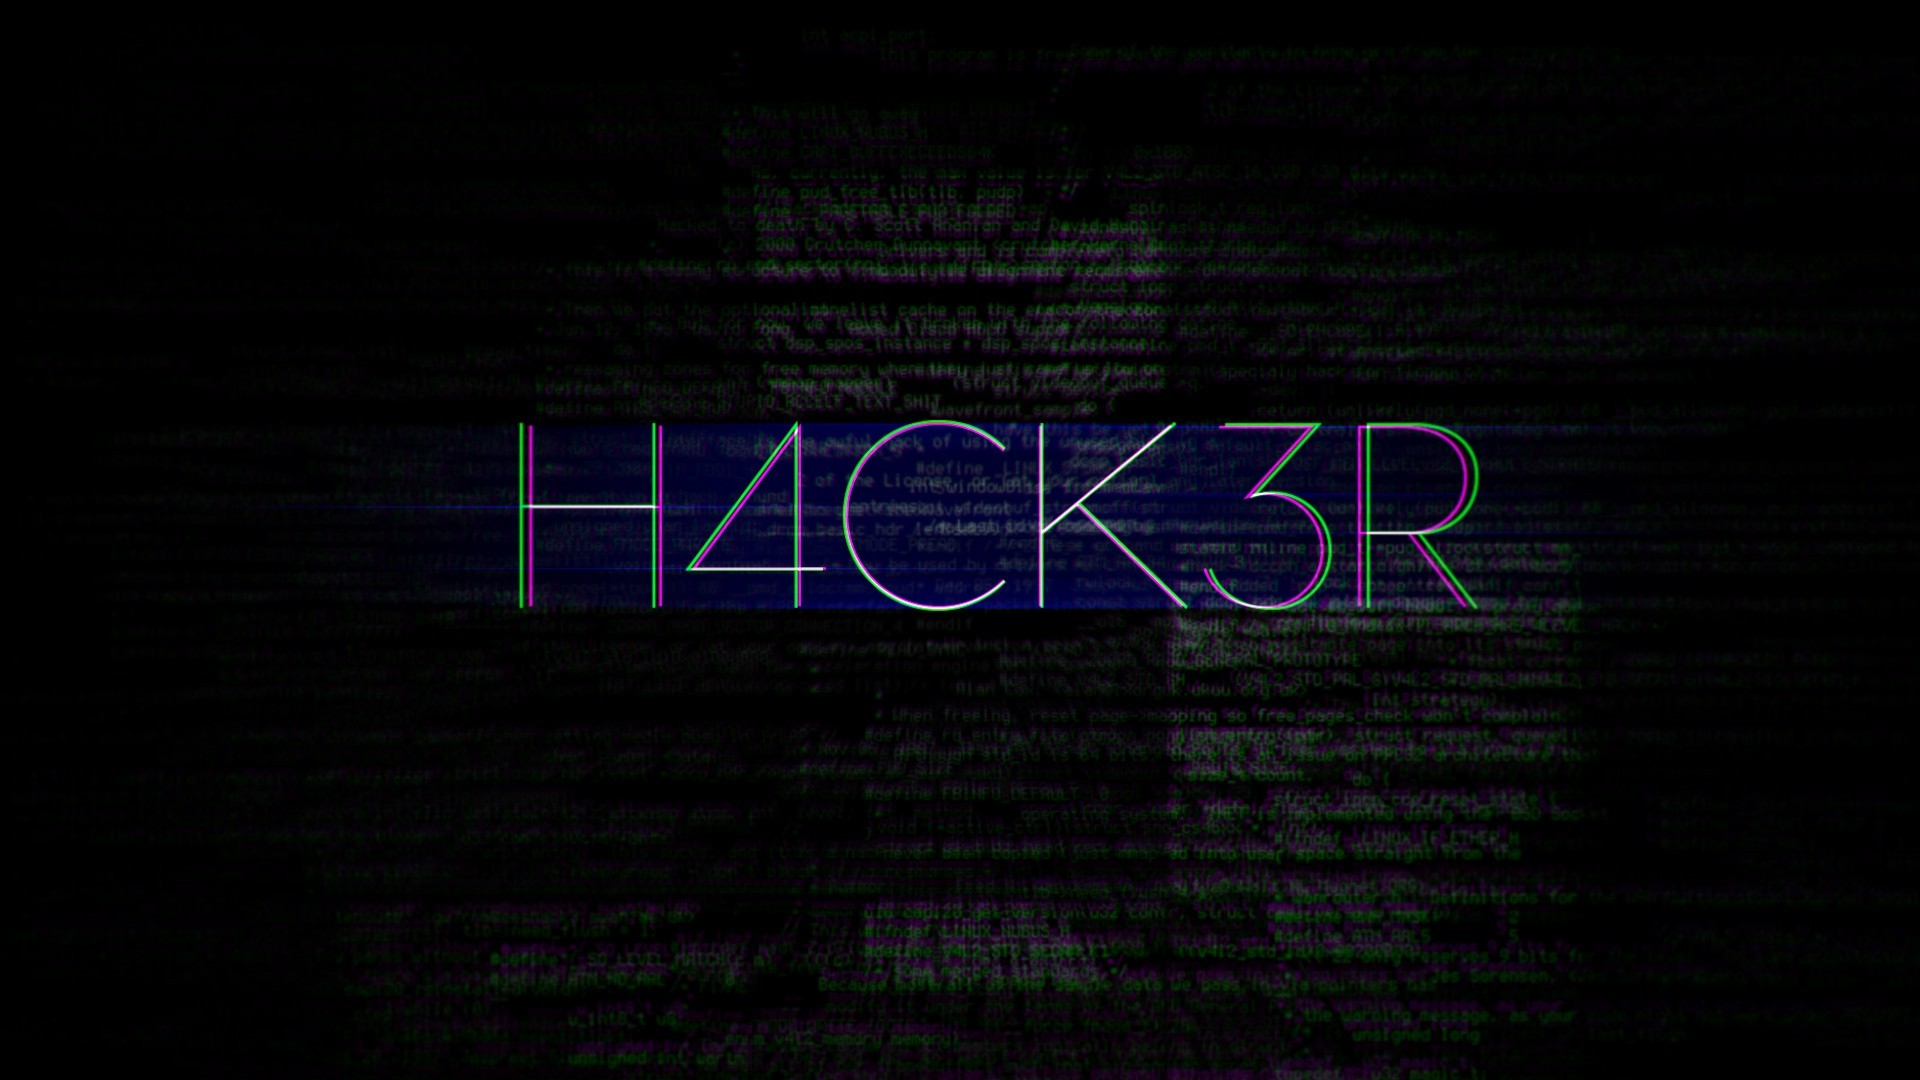 Hacker computer hd wallpaper 1920x1080 6405 - TiTi Apps